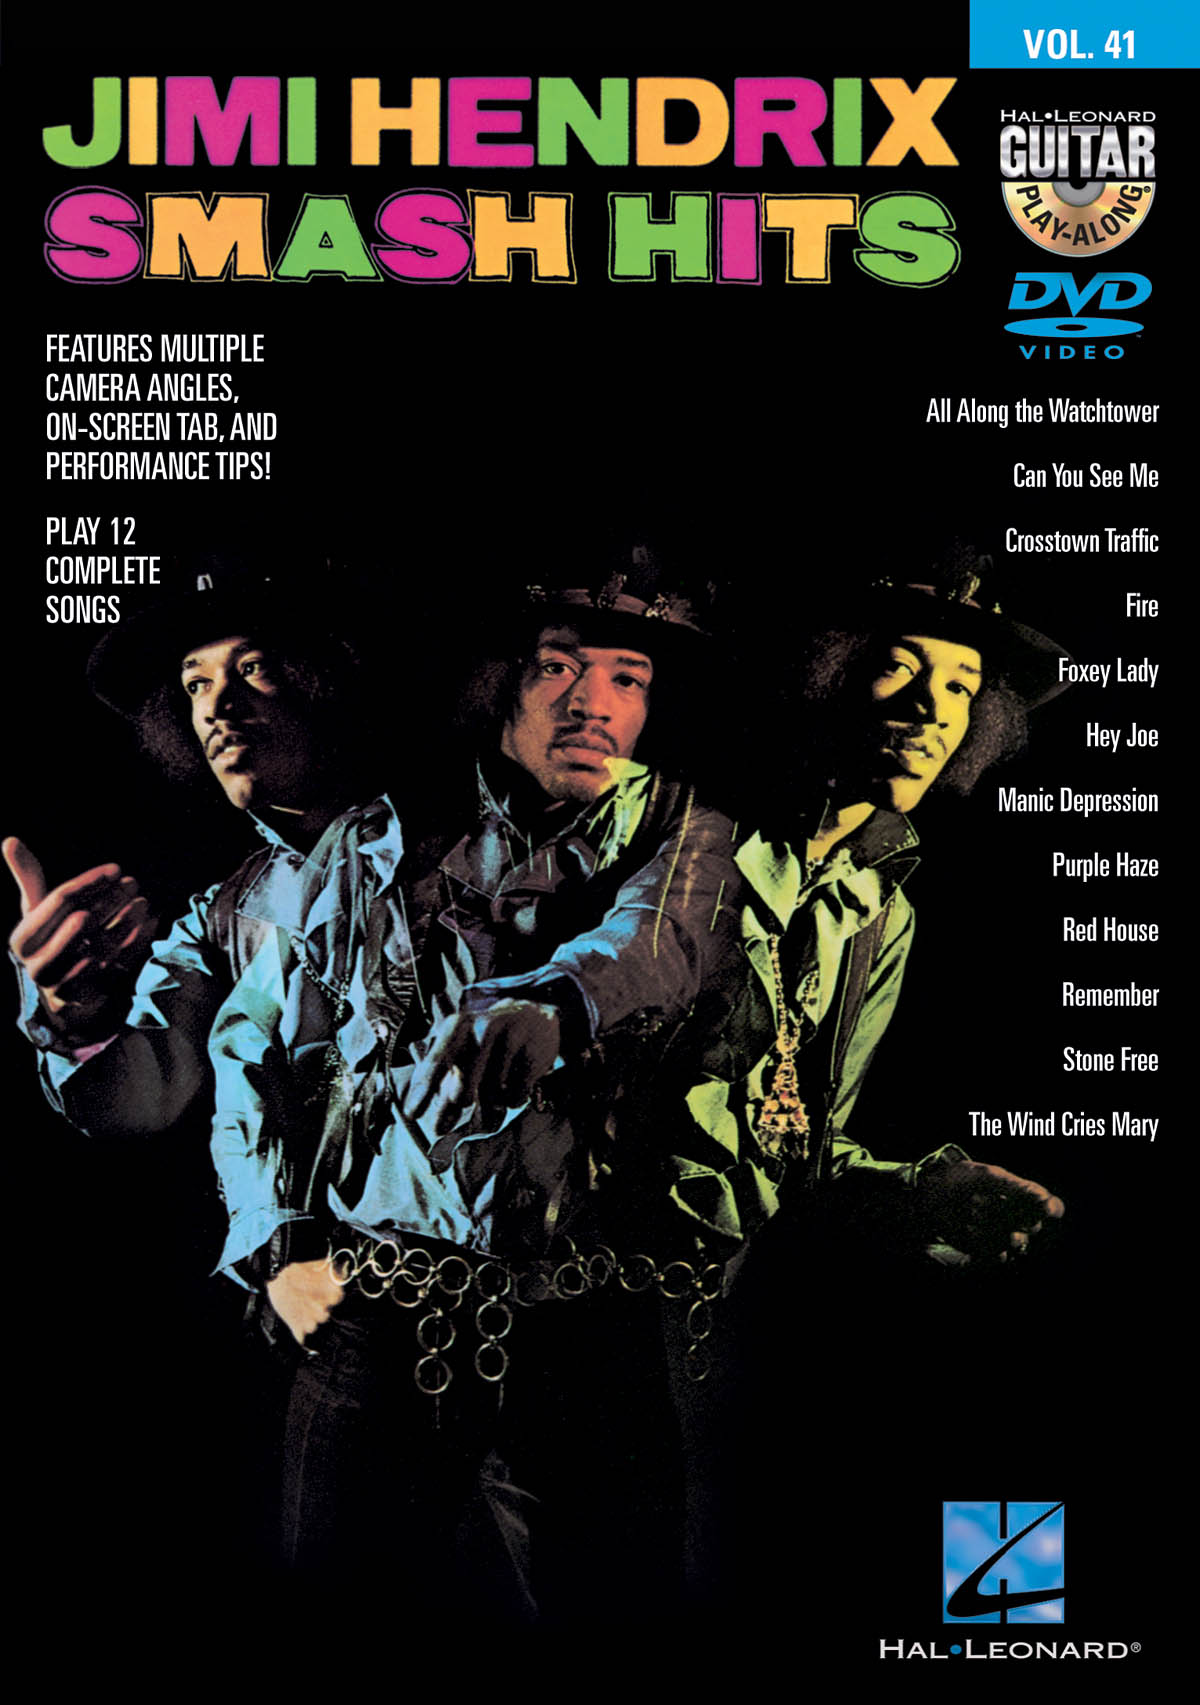 Jimi Hendrix: Smash Hits - Guitar Play-Along DVD Volume 41